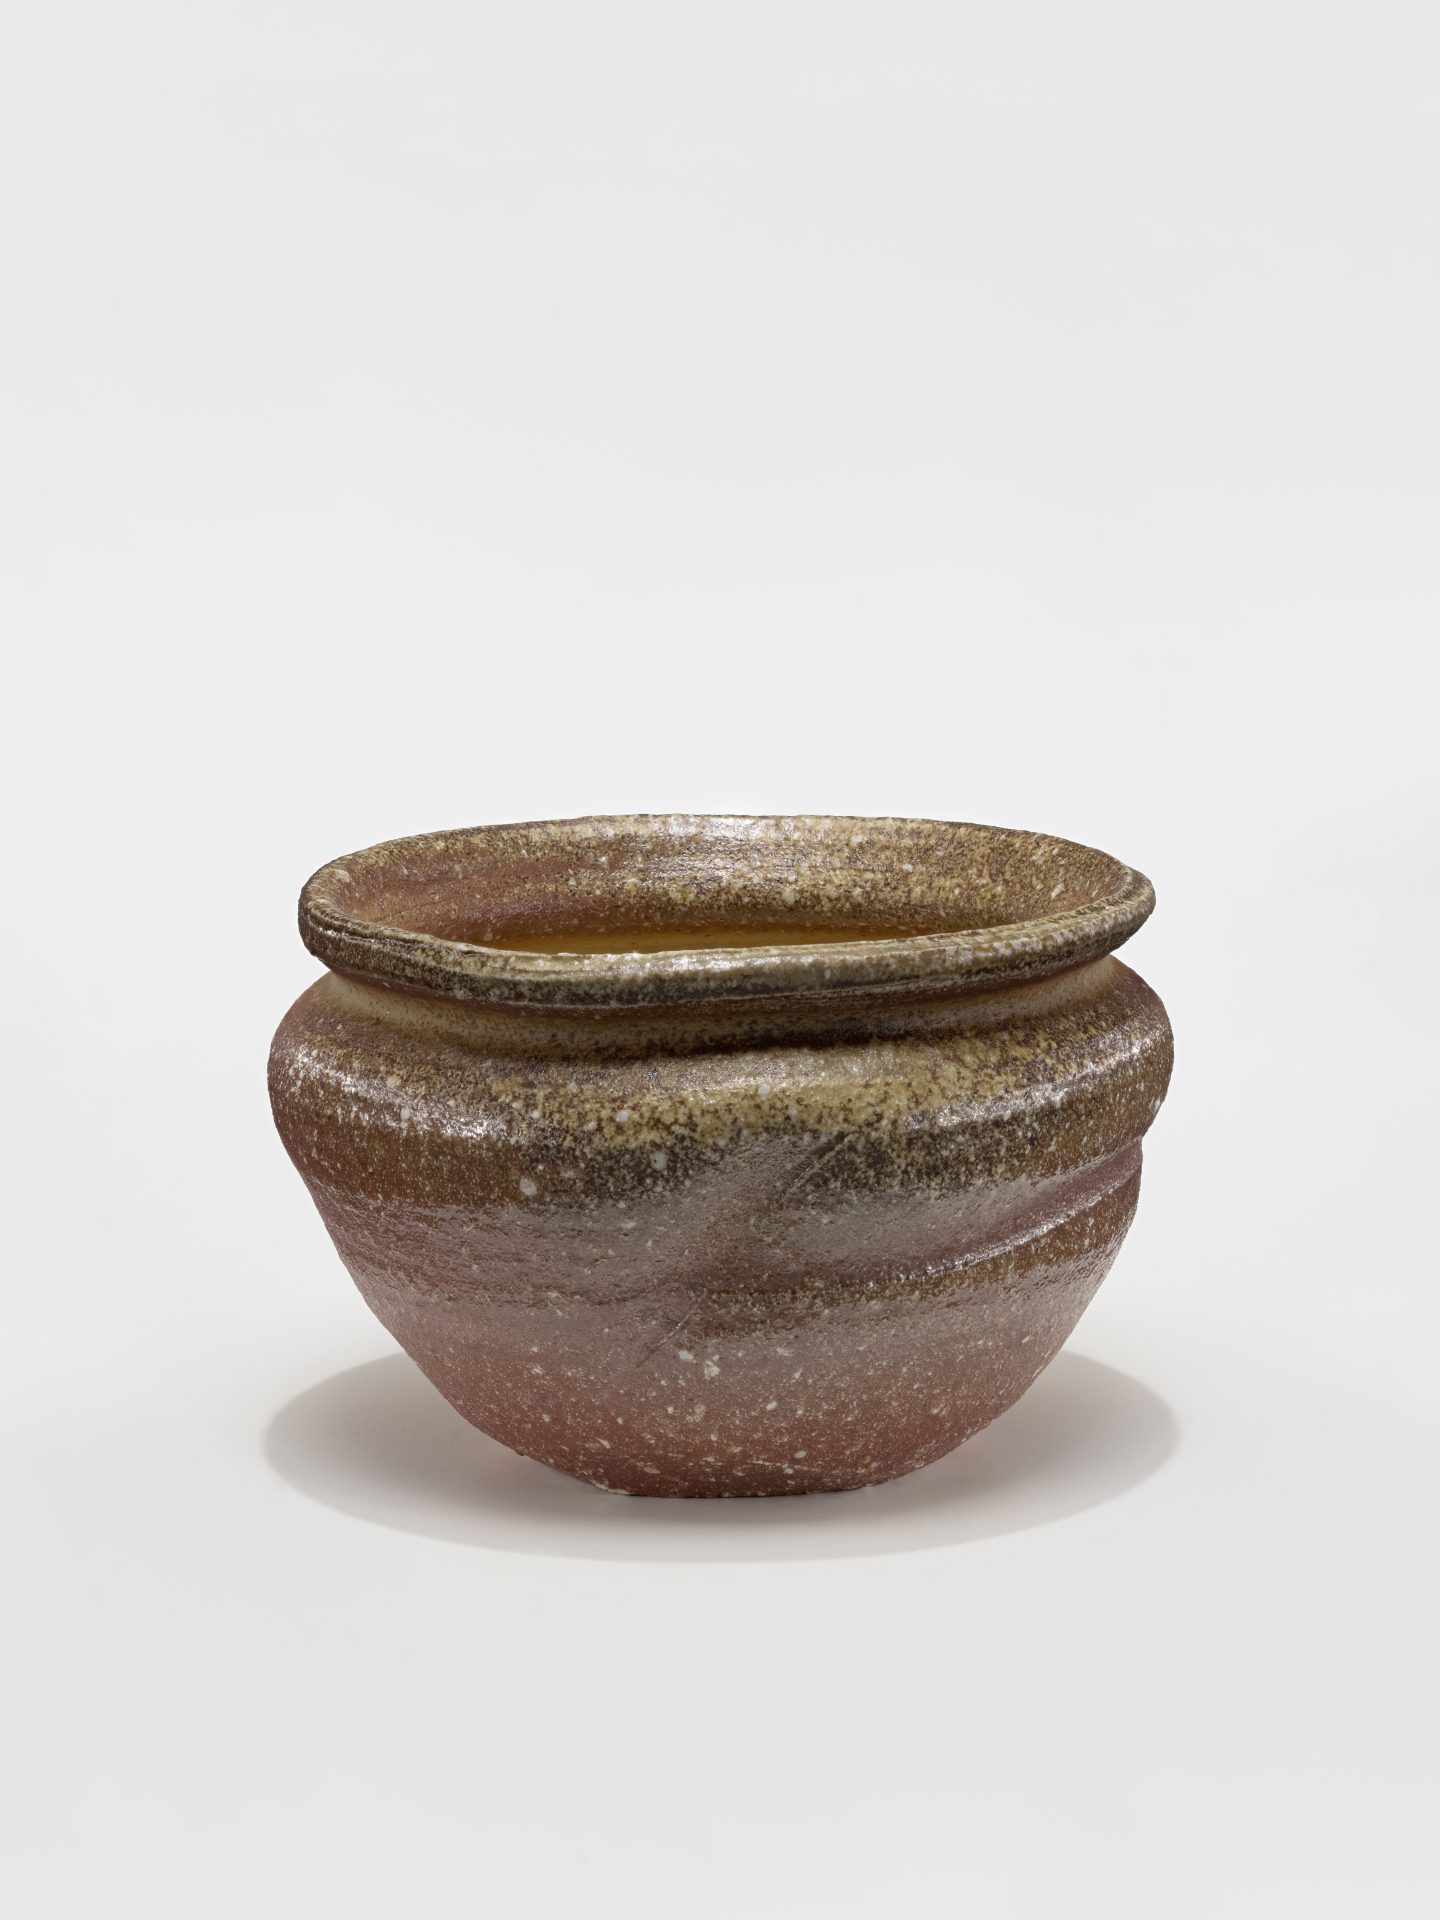 Photograph of a ceramic vessel by Japanese artist Ueda Naokata V